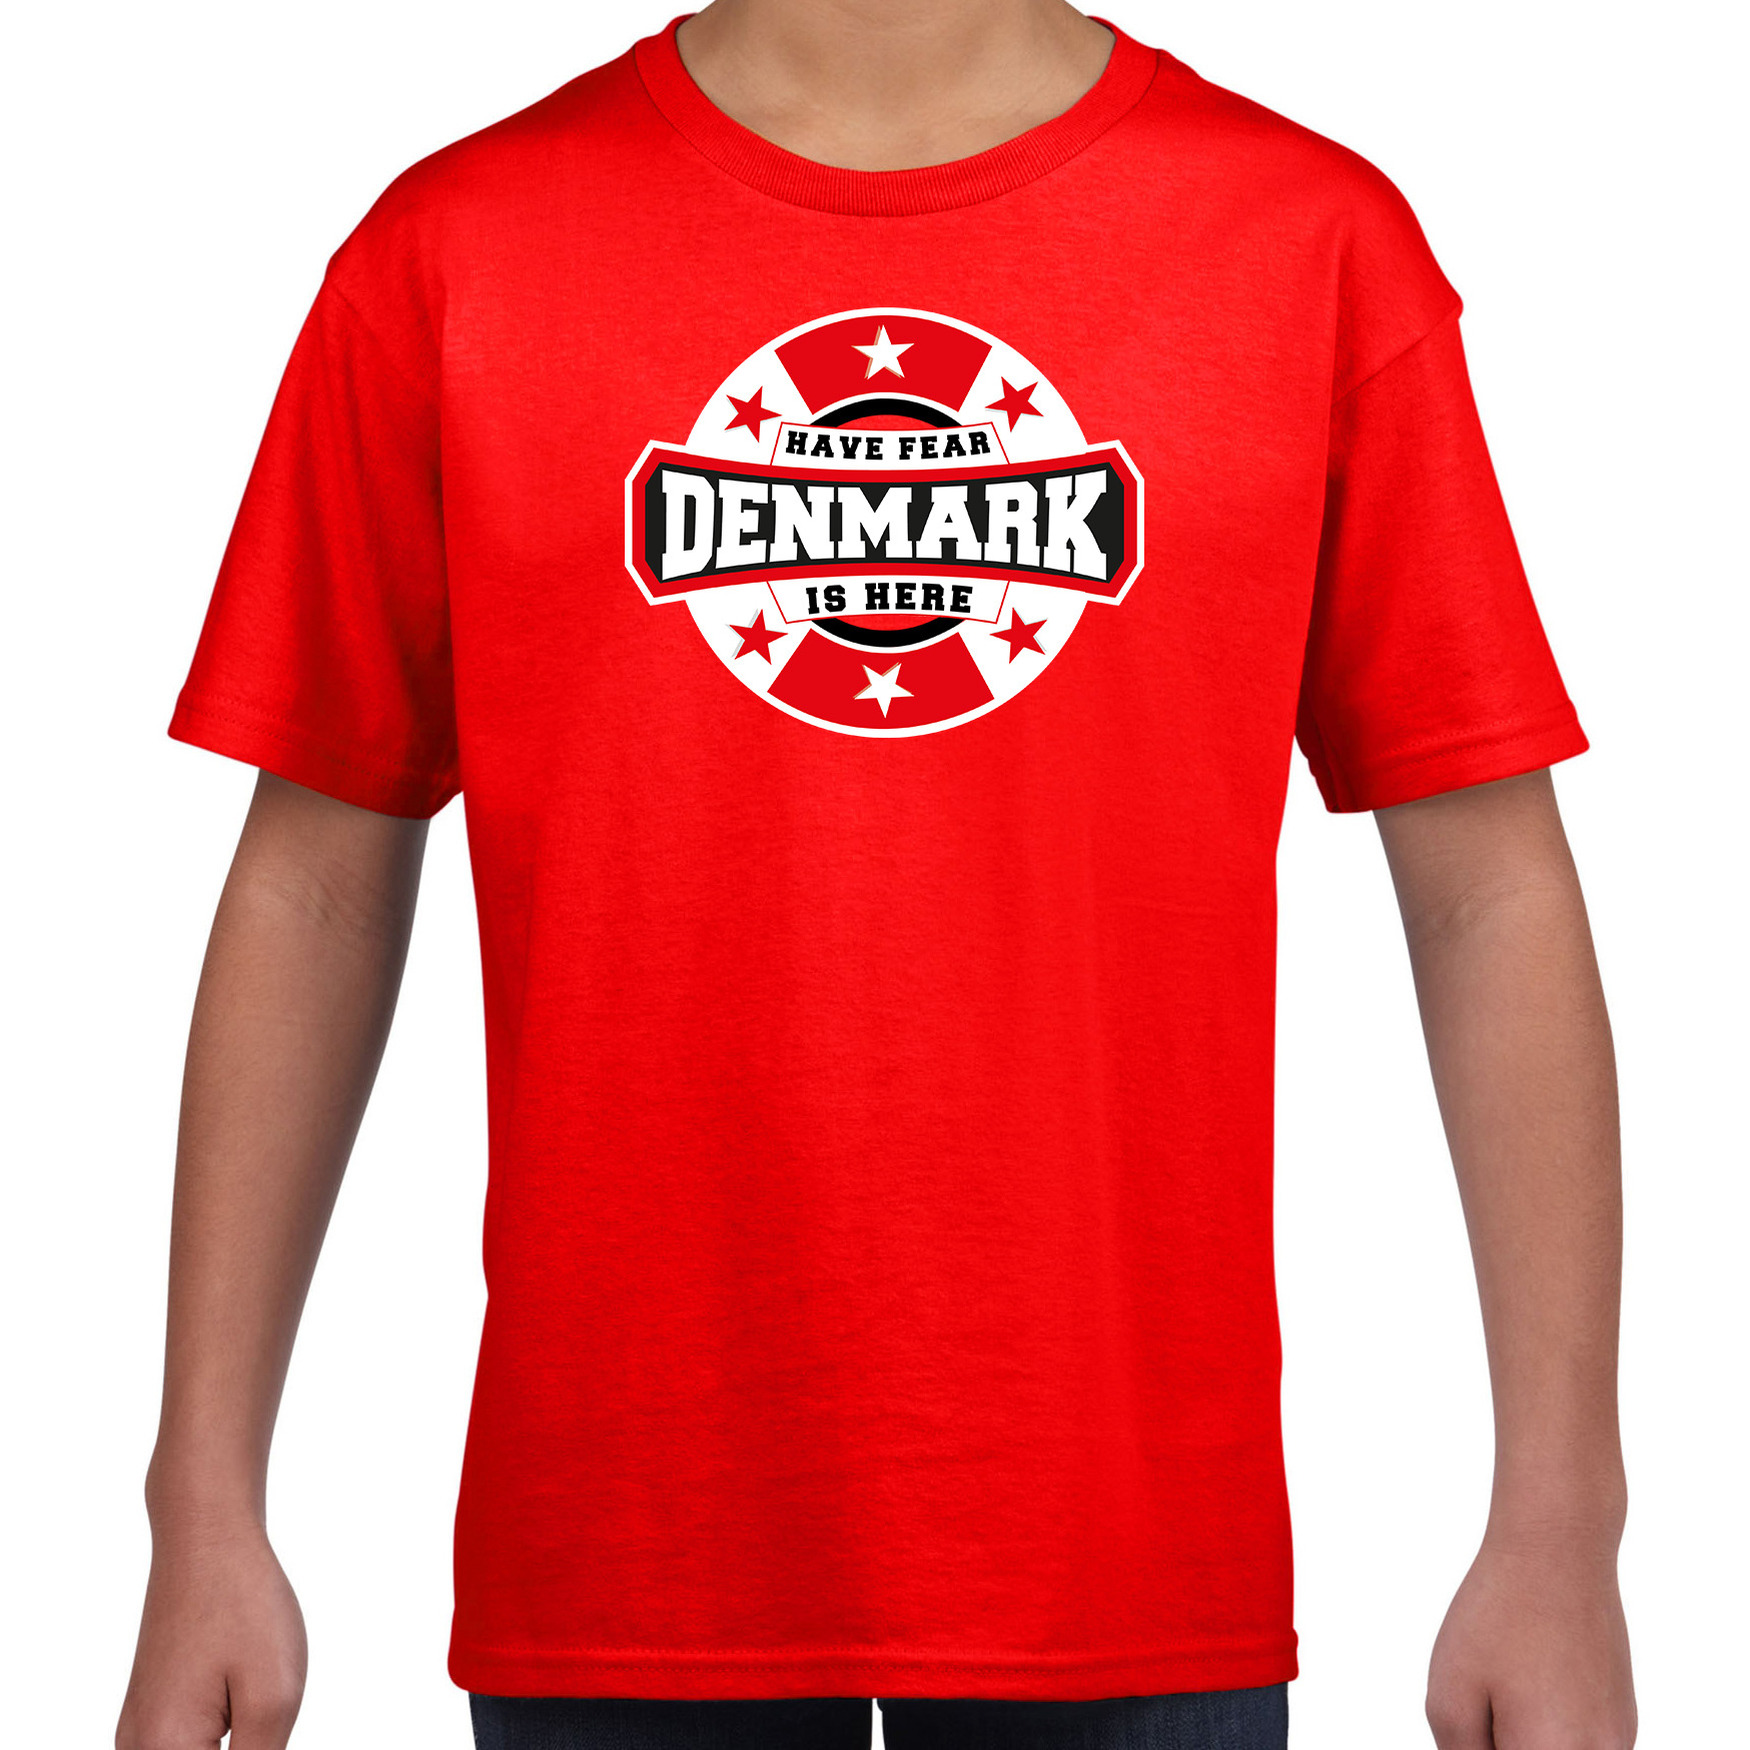 Have fear Denmark is here-Denemarken supporter t-shirt rood voor kids